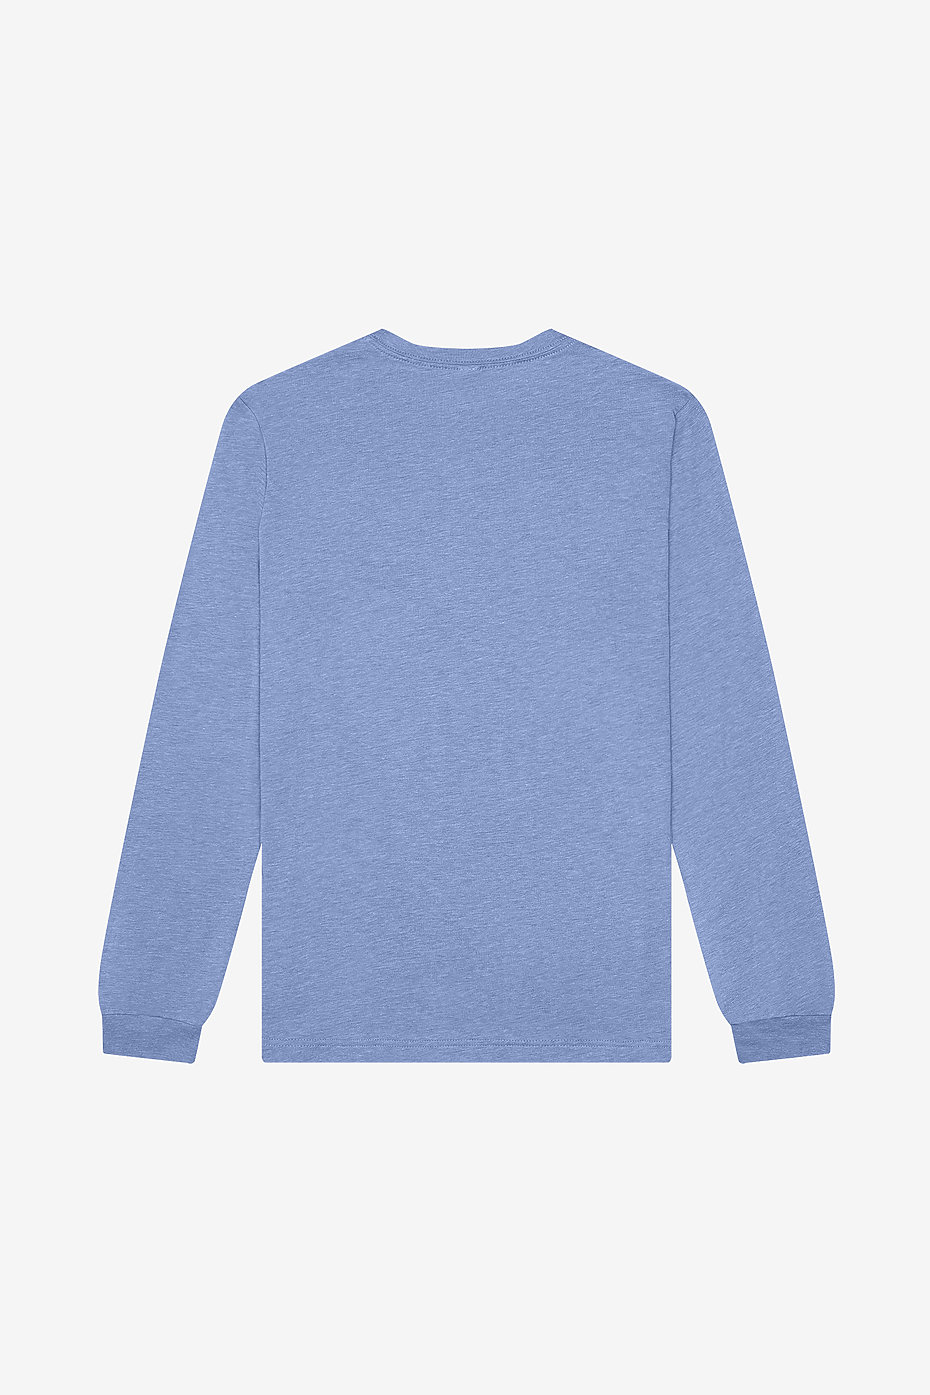 Bella Canvas Perfect Tri-Blend Fashionable T-Shirt, Steel Blue, XX-Large :  : Home & Kitchen